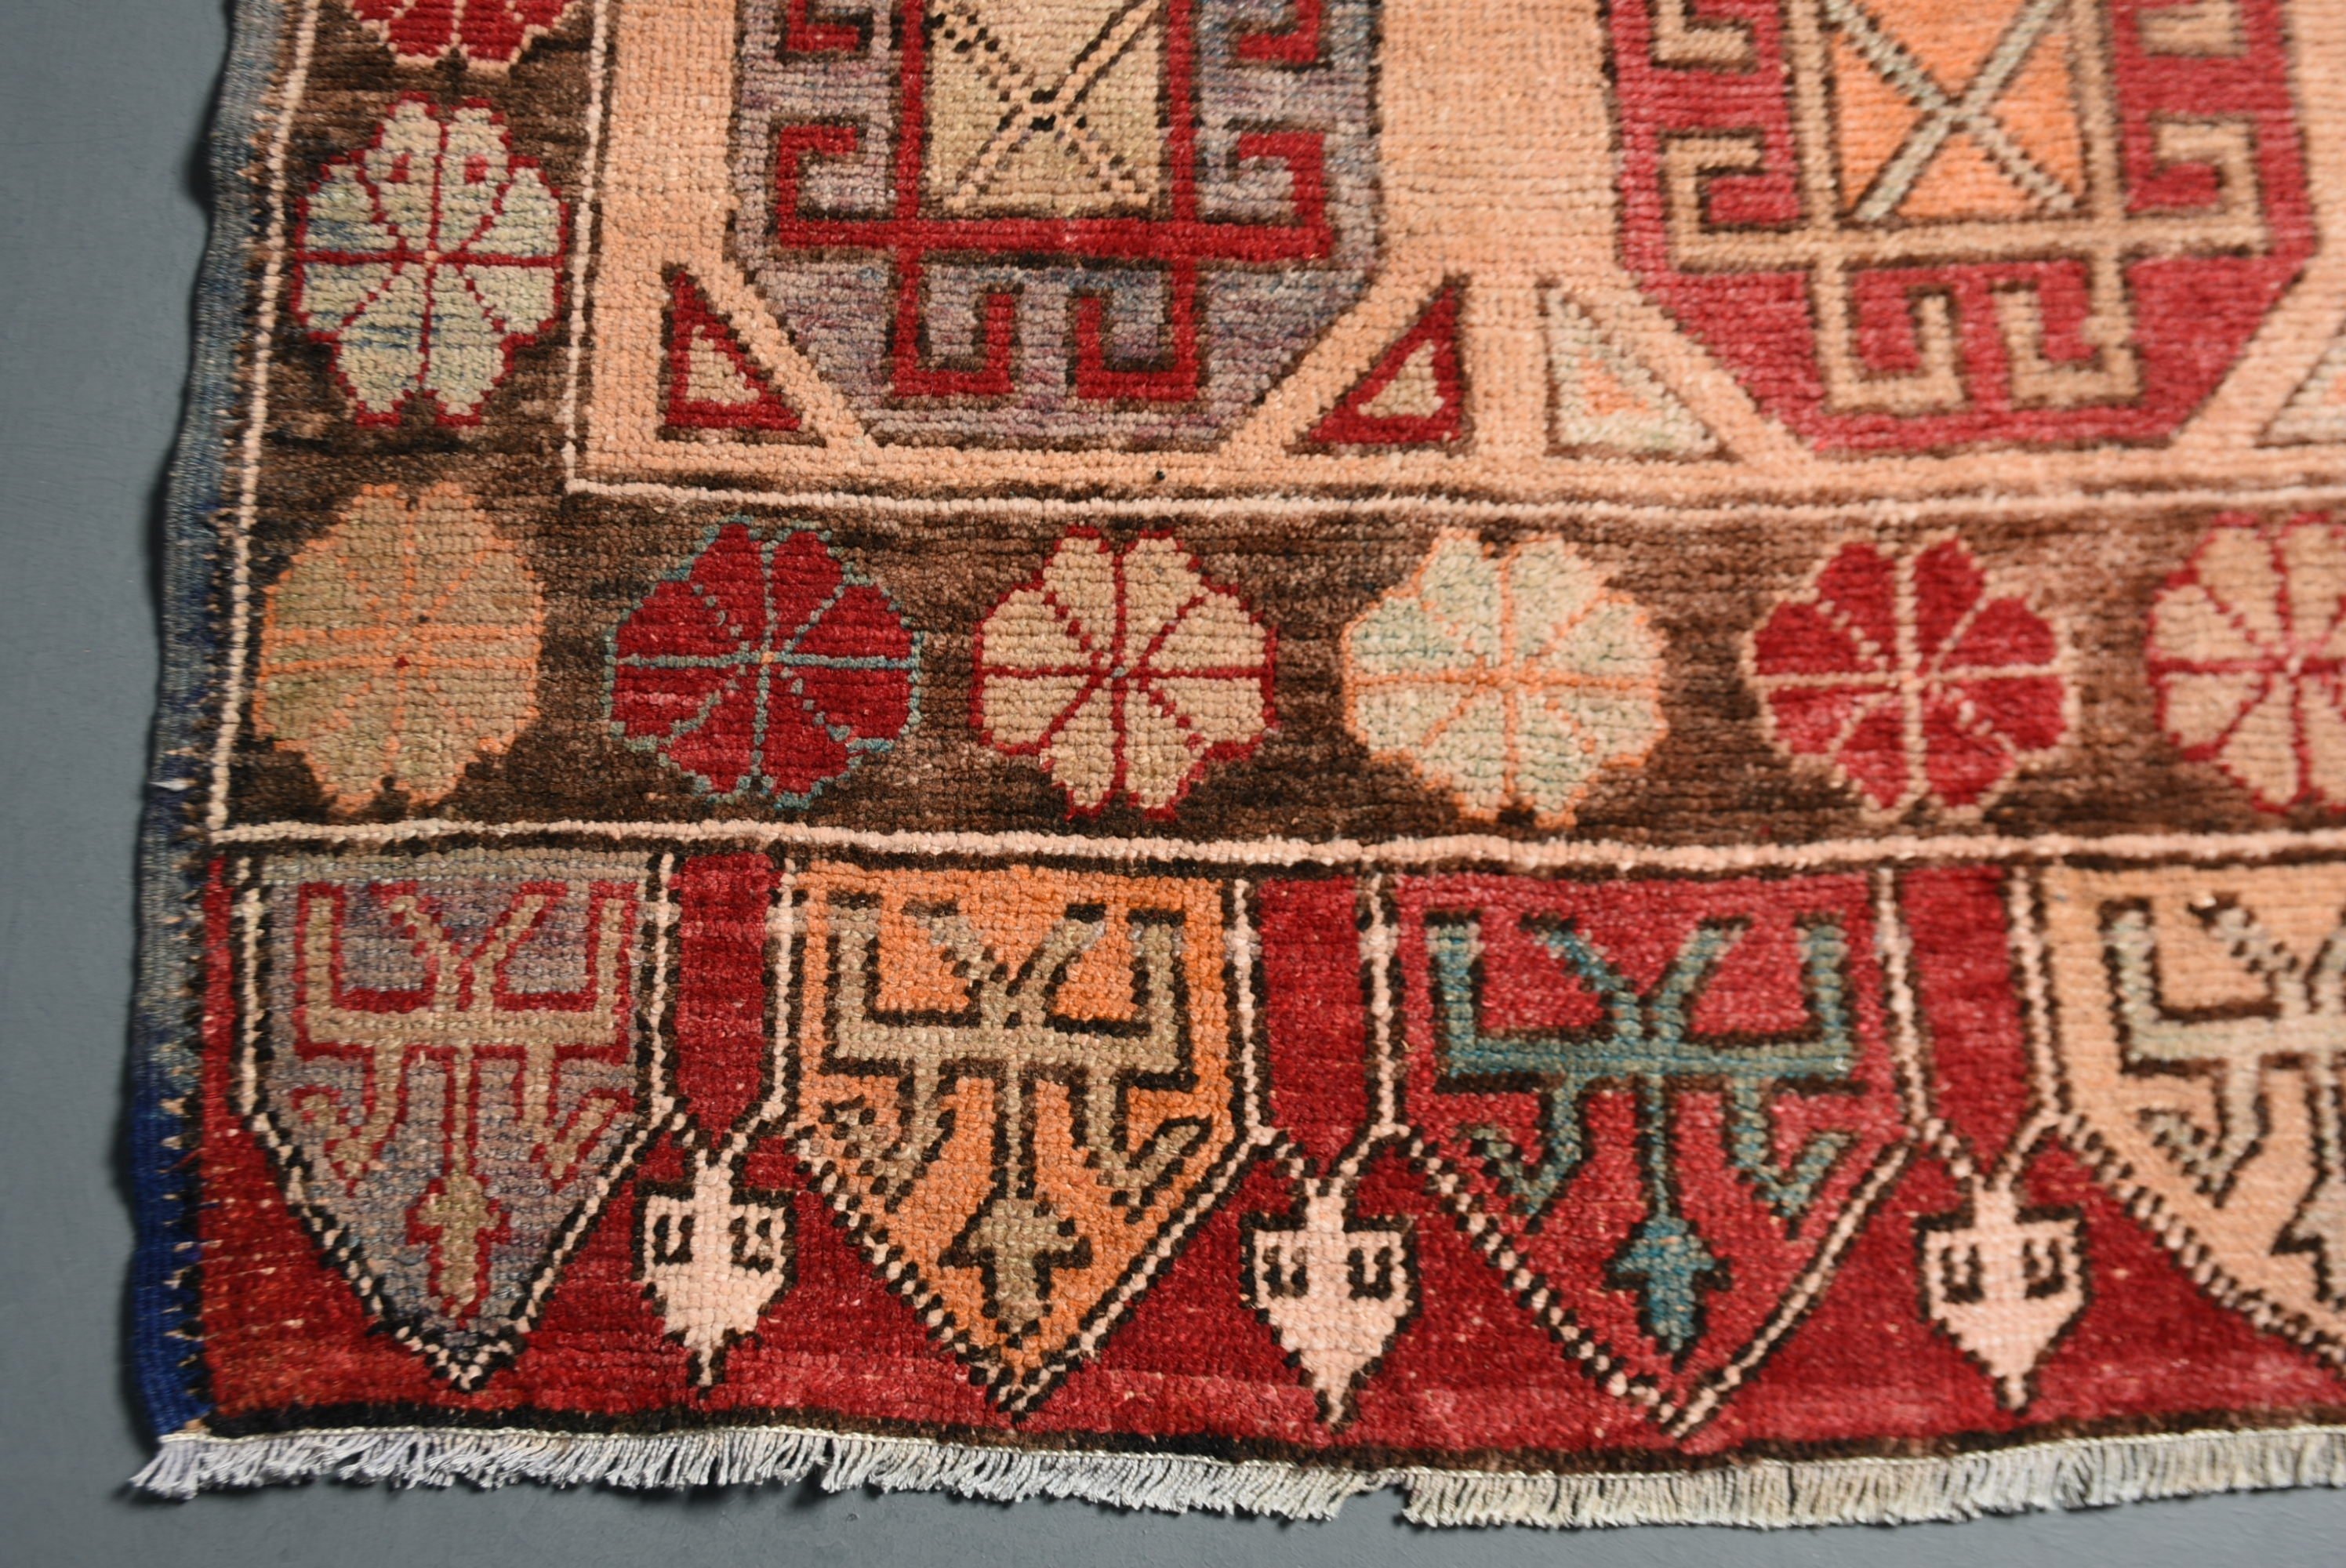 Vintage Rug, Kitchen Rugs, Turkish Rug, 4.6x6.4 ft Area Rugs, Rugs for Floor, Red Moroccan Rug, Nursery Rug, Antique Rug, Living Room Rug